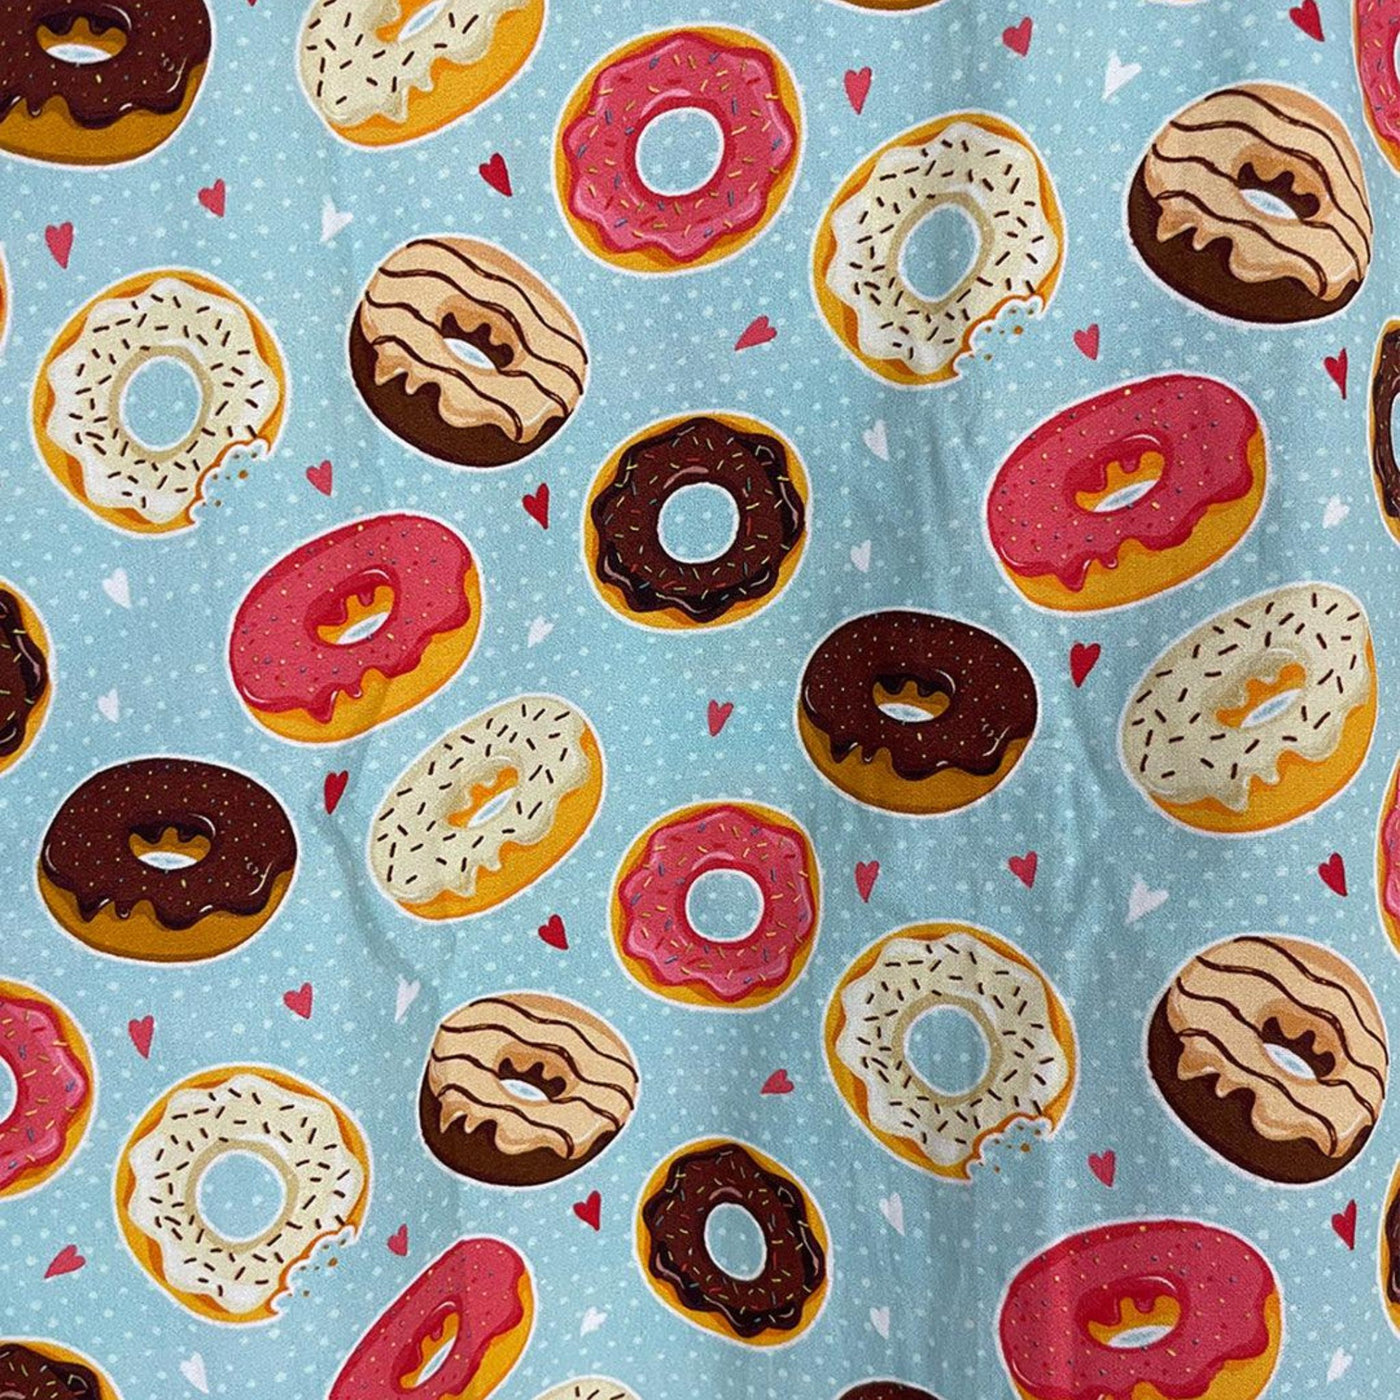 Pocket Nightwear for Girls and Boys - Yummy donuts print Joeycare 